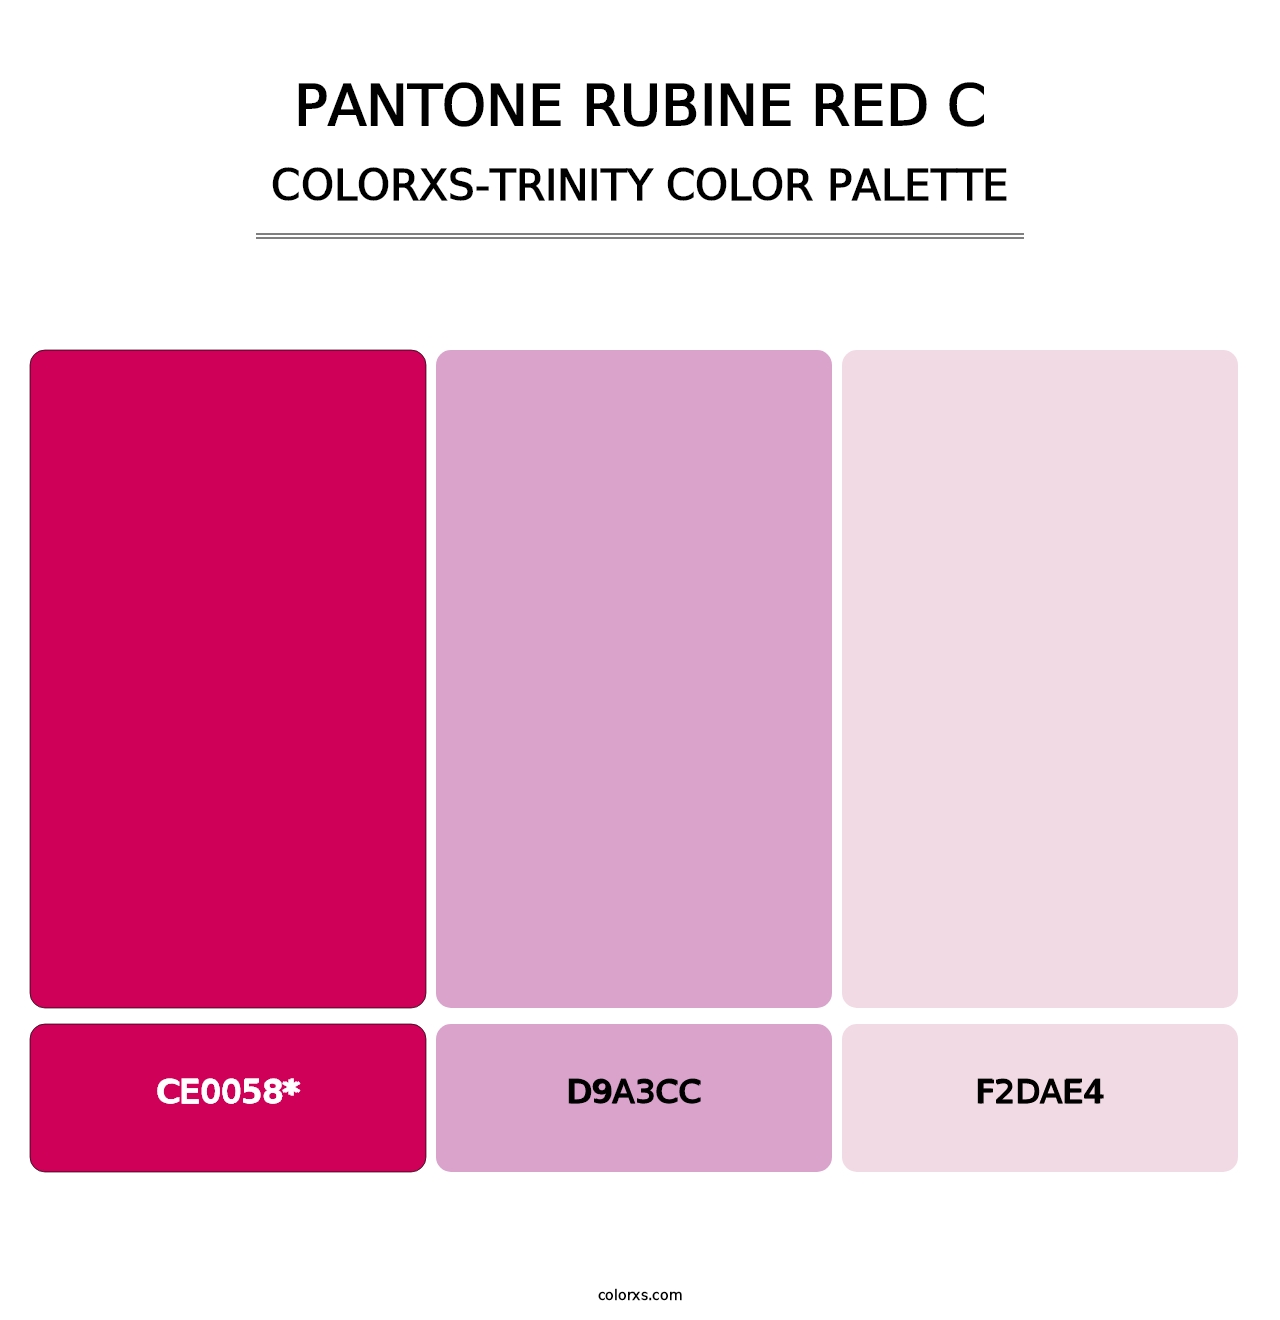 PANTONE Rubine Red C - Colorxs Trinity Palette